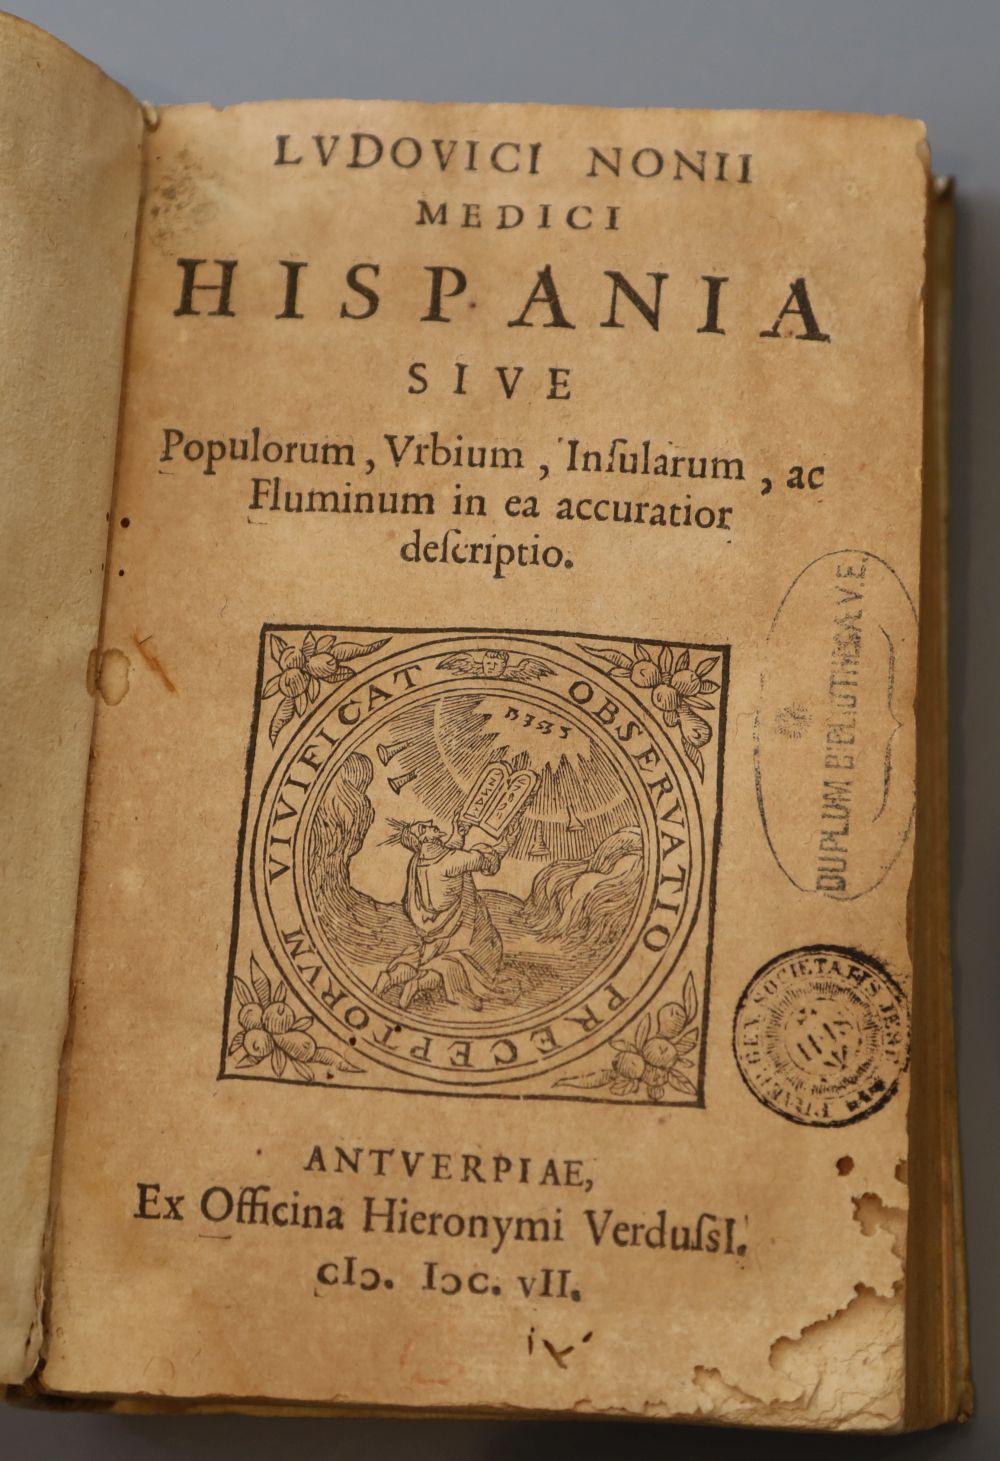 Nonnius, Ludovicus, ca.1555-1645? - Ludovici nonii Medici Hispania, vellum, 16mo, writings, (including biro!) to front fly leaf, librar